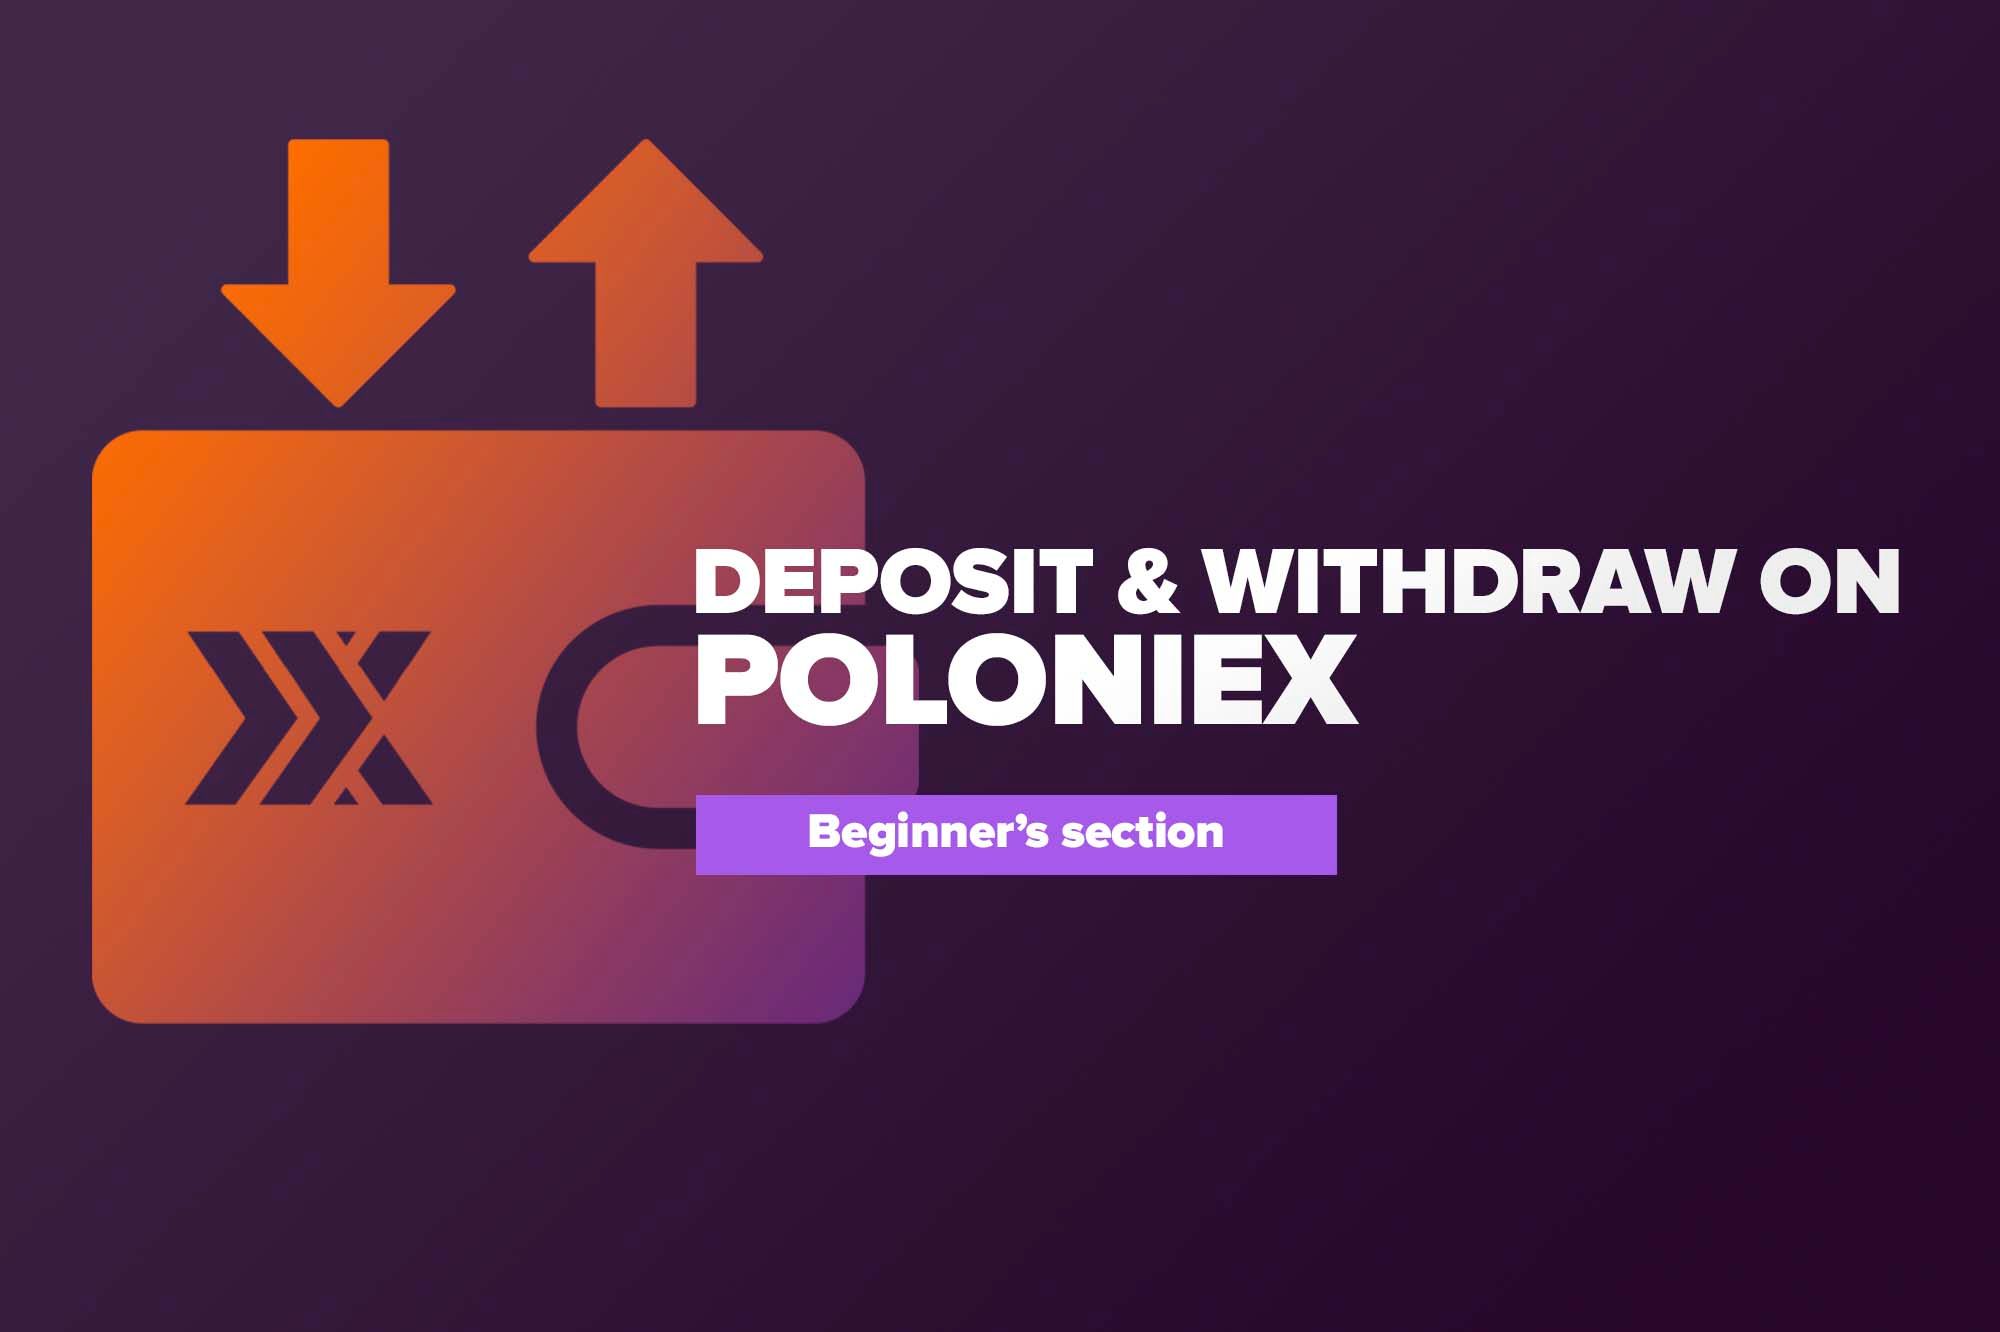 Article Deposit & Withdraw on Poloniex?